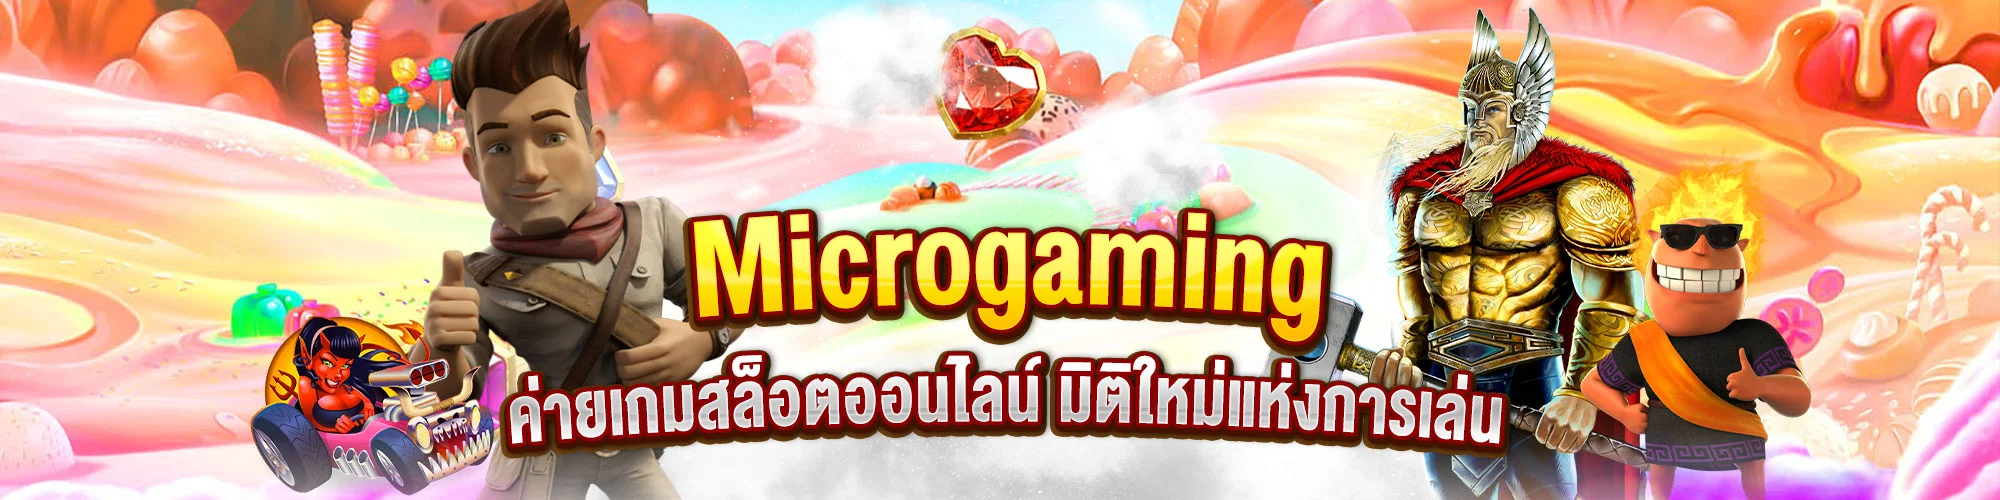 Microgaming ค่ายเกมสล็อตออนไลน์ มิติใหม่แห่งการเล่น